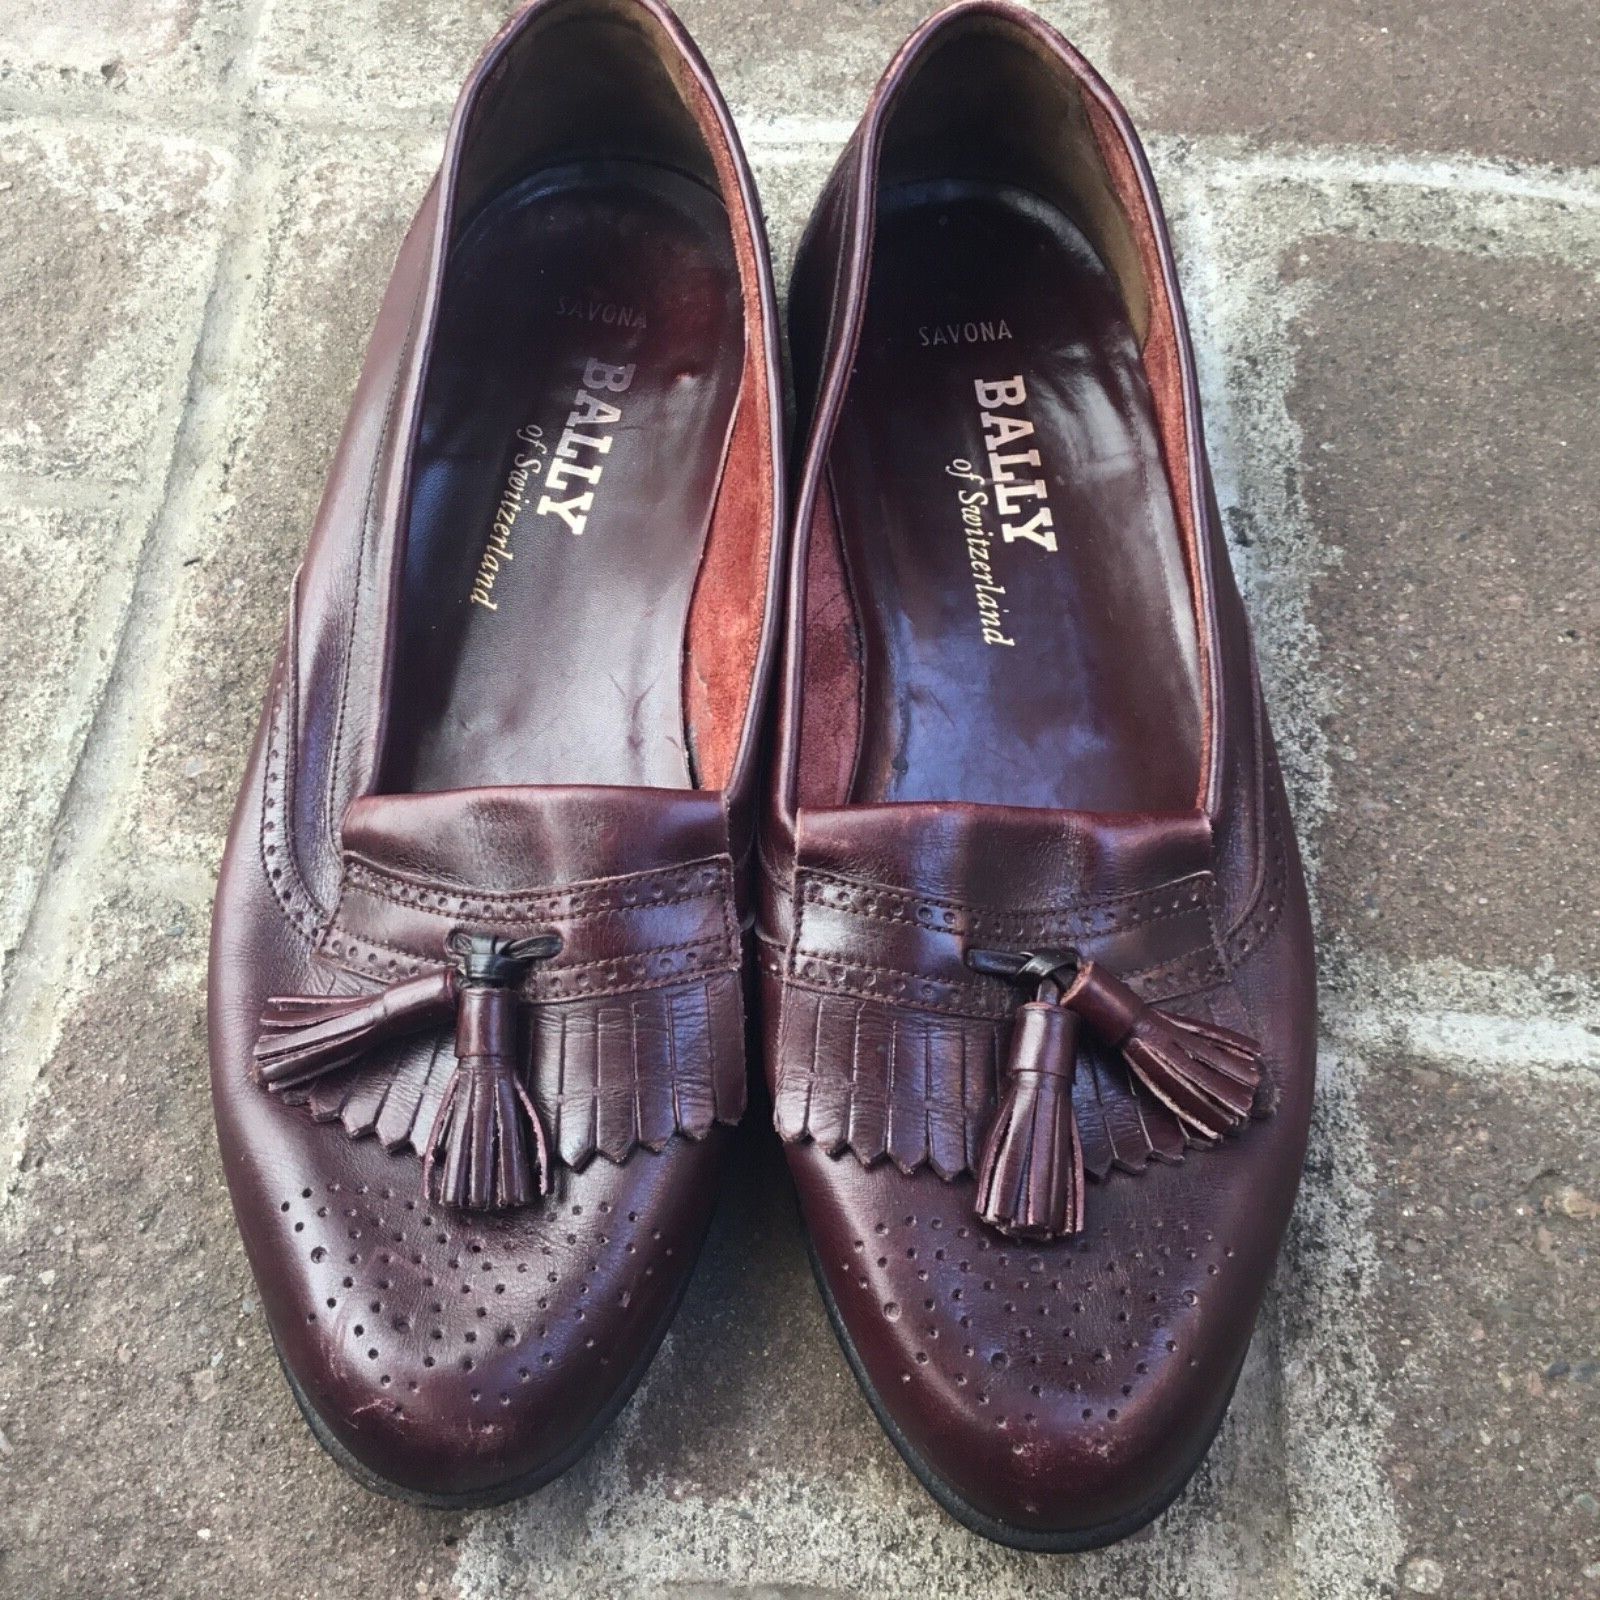 BALLY Mens Kiltie Dress Loafer Shoes “Savona” Brown Leather Slip-On Tassel 10.5M